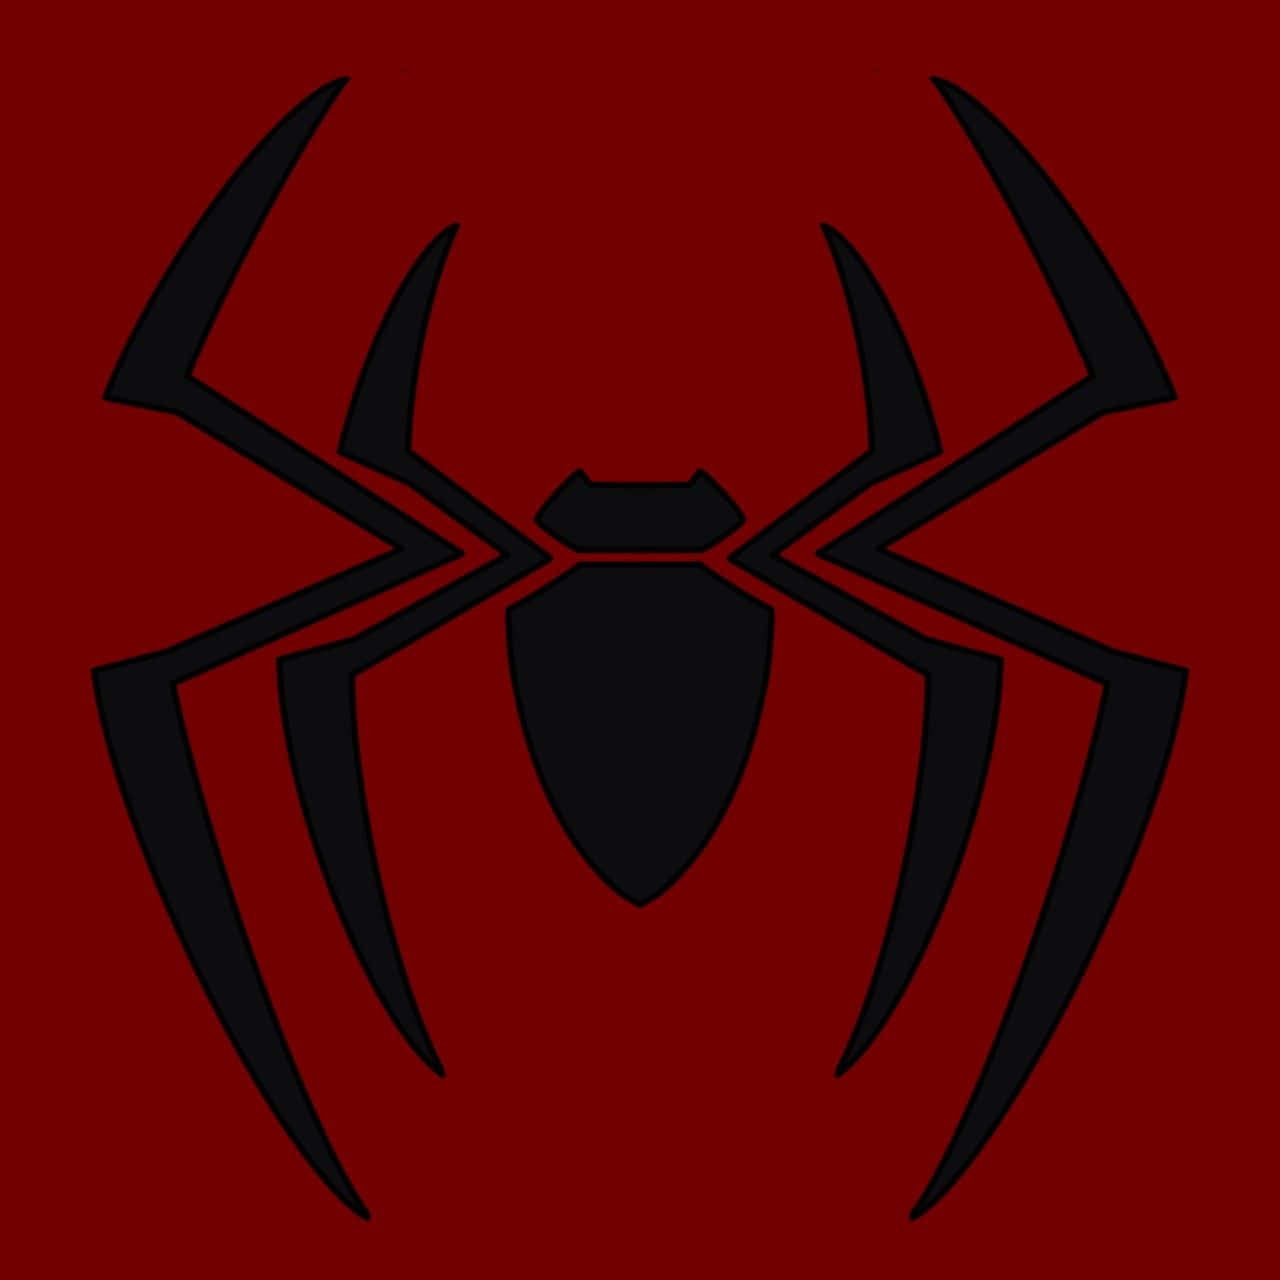 Black Spider Man Ps4 Logo On Red Background Wallpaper